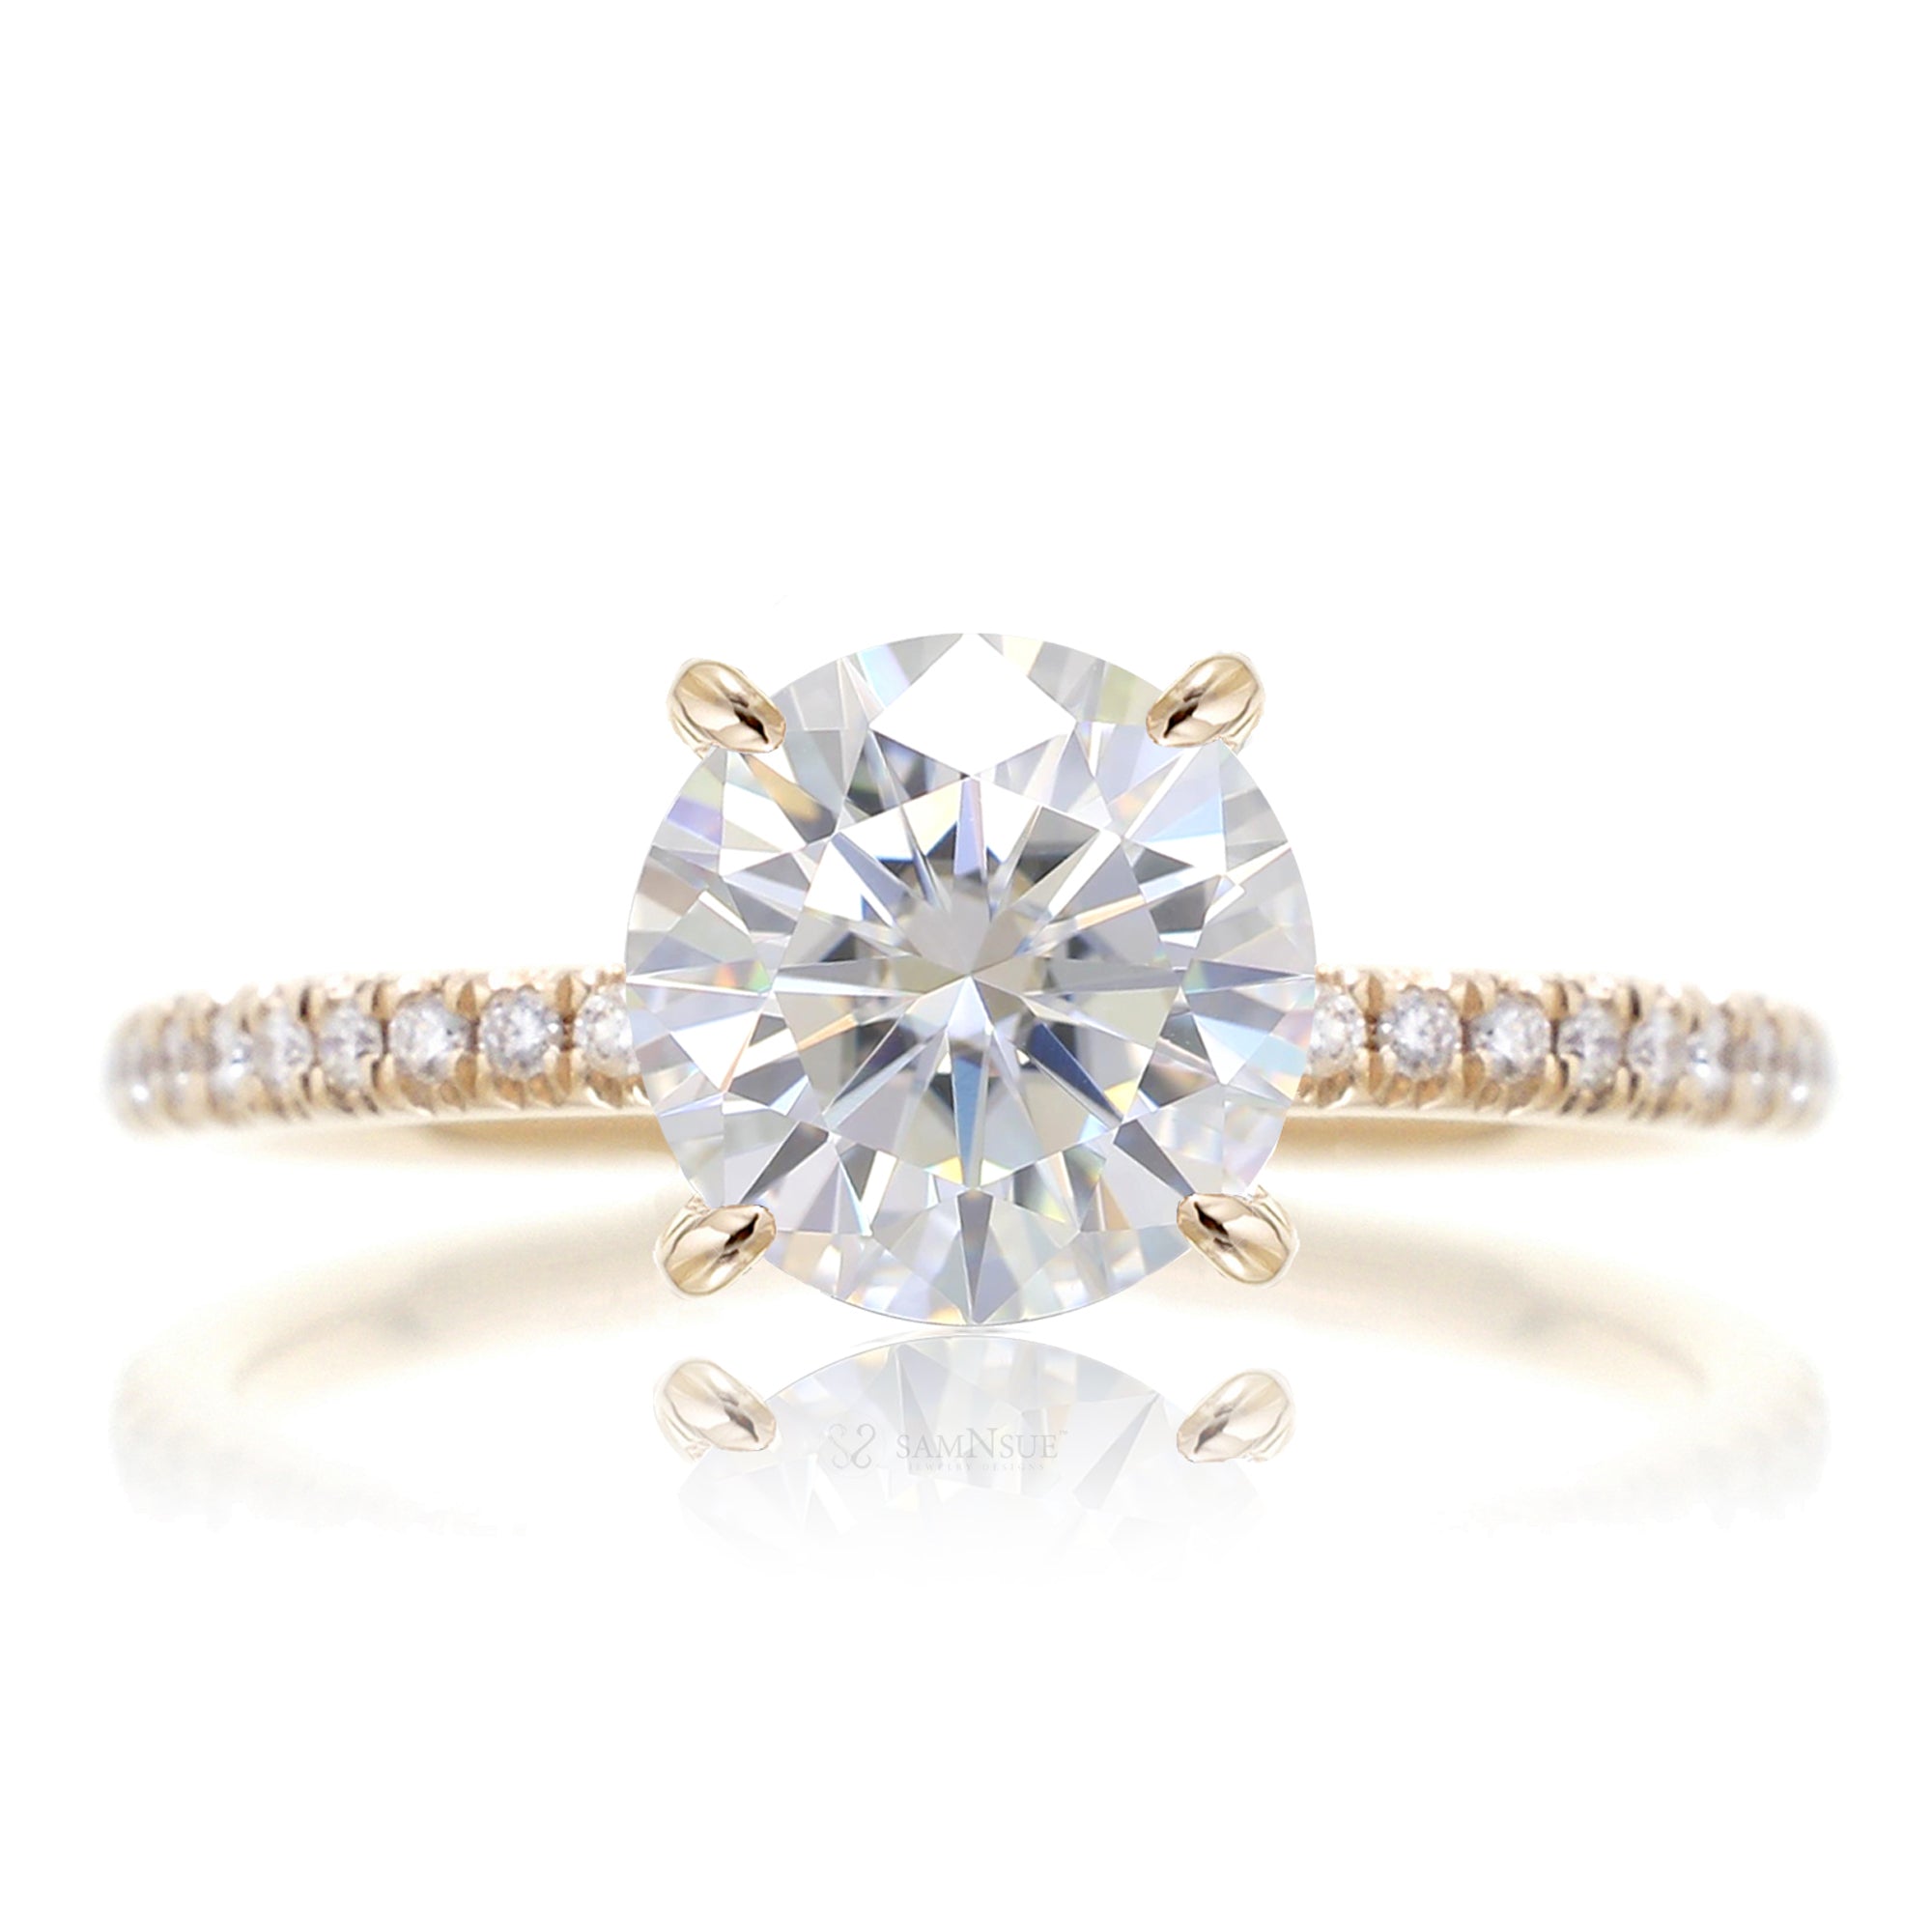 Round brilliant cut moissanite diamond band engagement ring yellow gold - The Ava